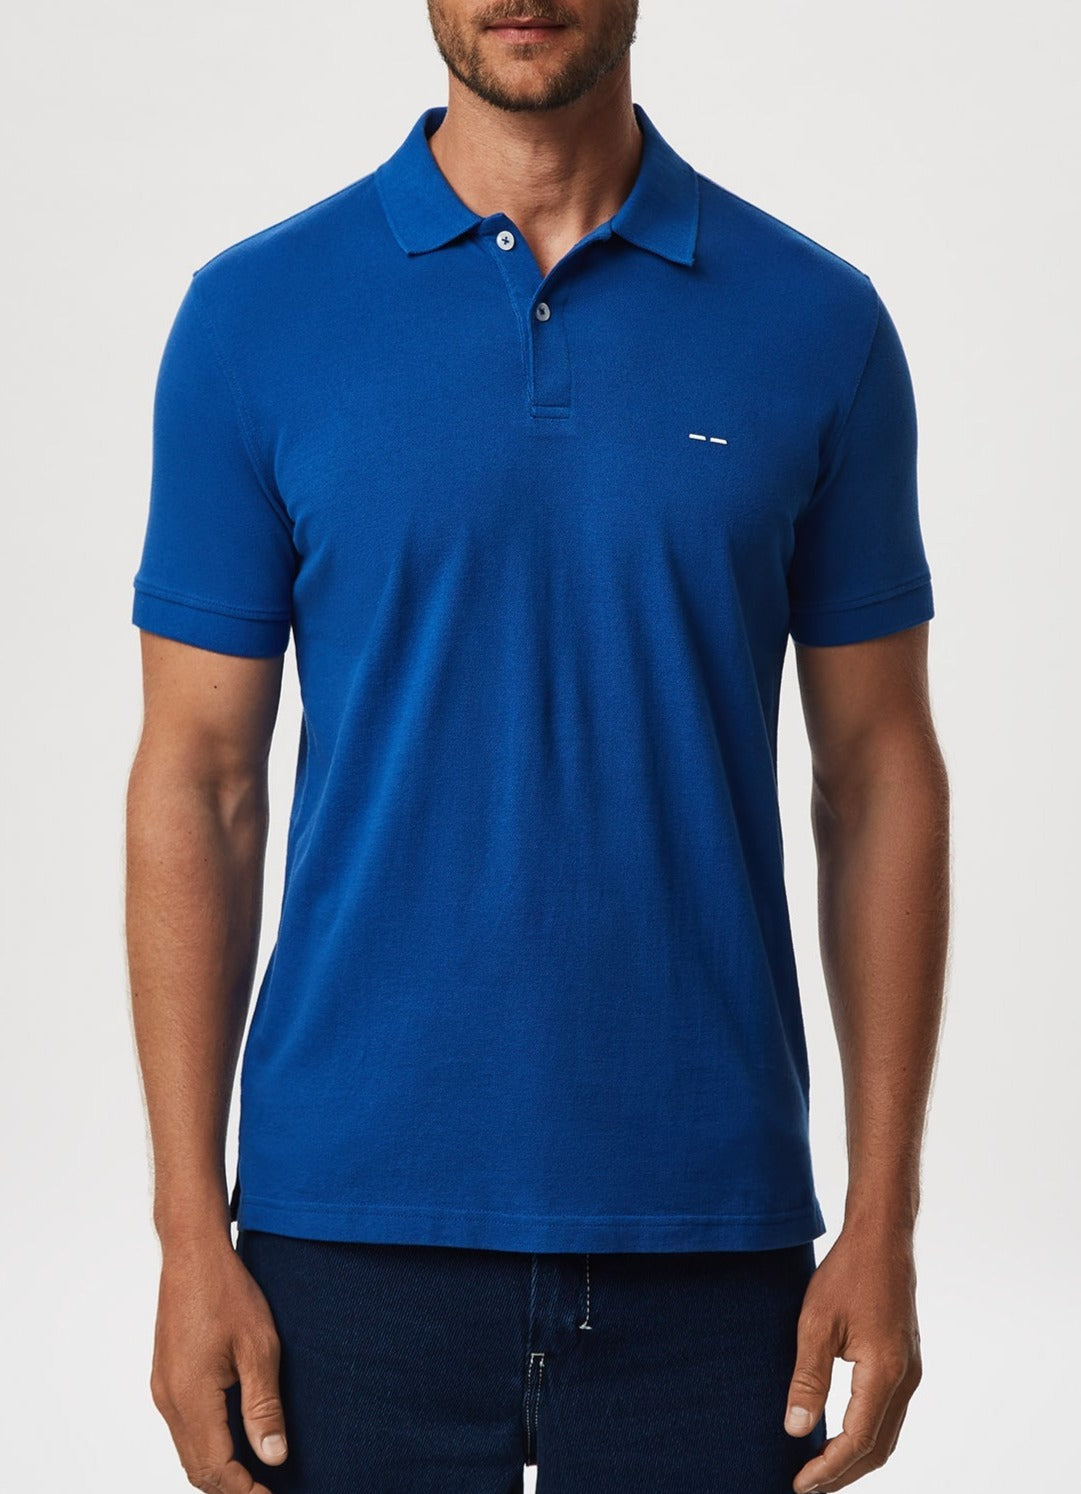 Men Polo | Ink Blue Cotton Pique Washed Polo Shirt by Spanish designer Adolfo Dominguez